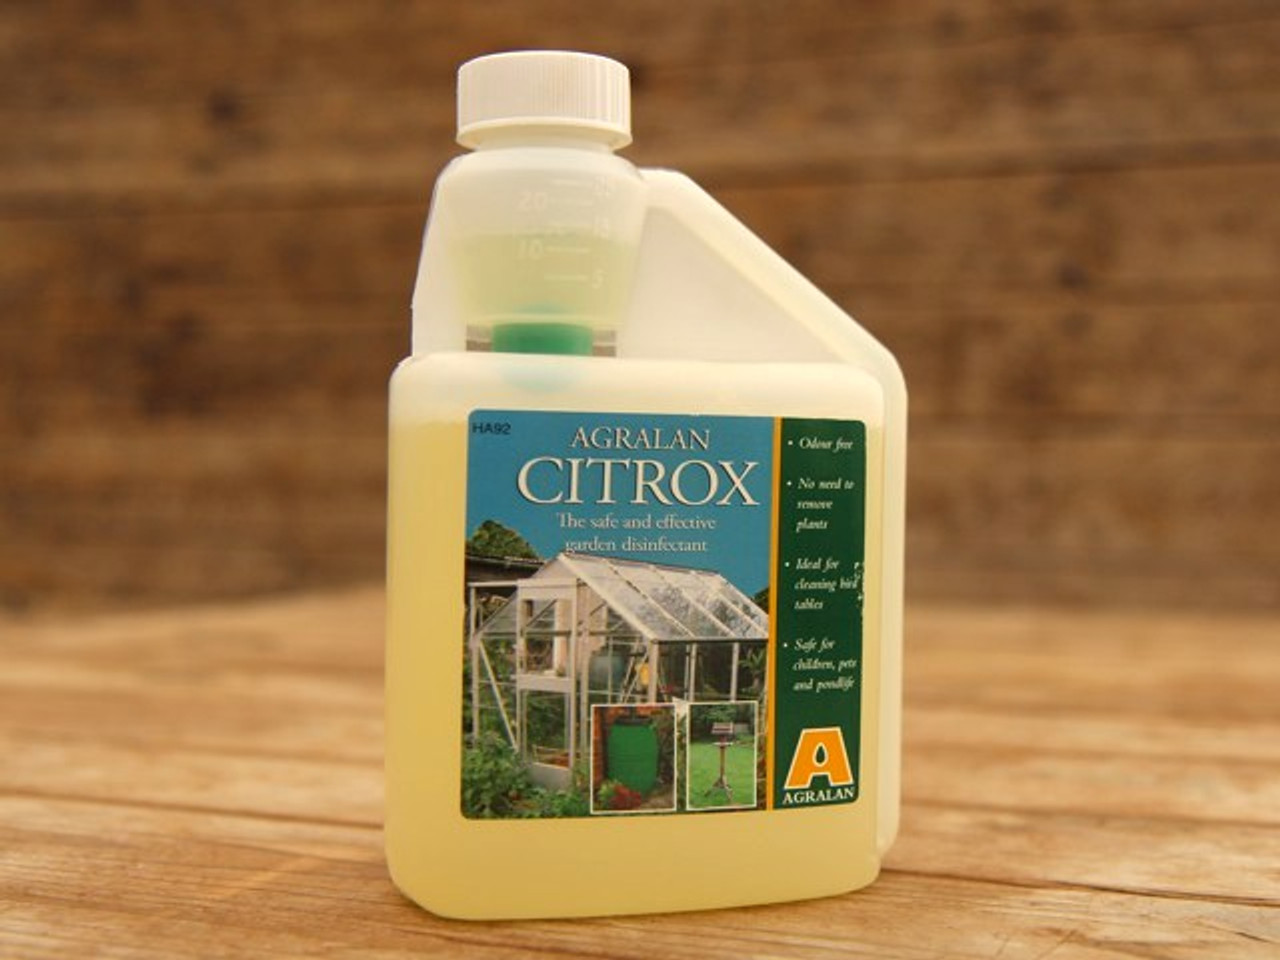 bottle of Citrox disinfectant